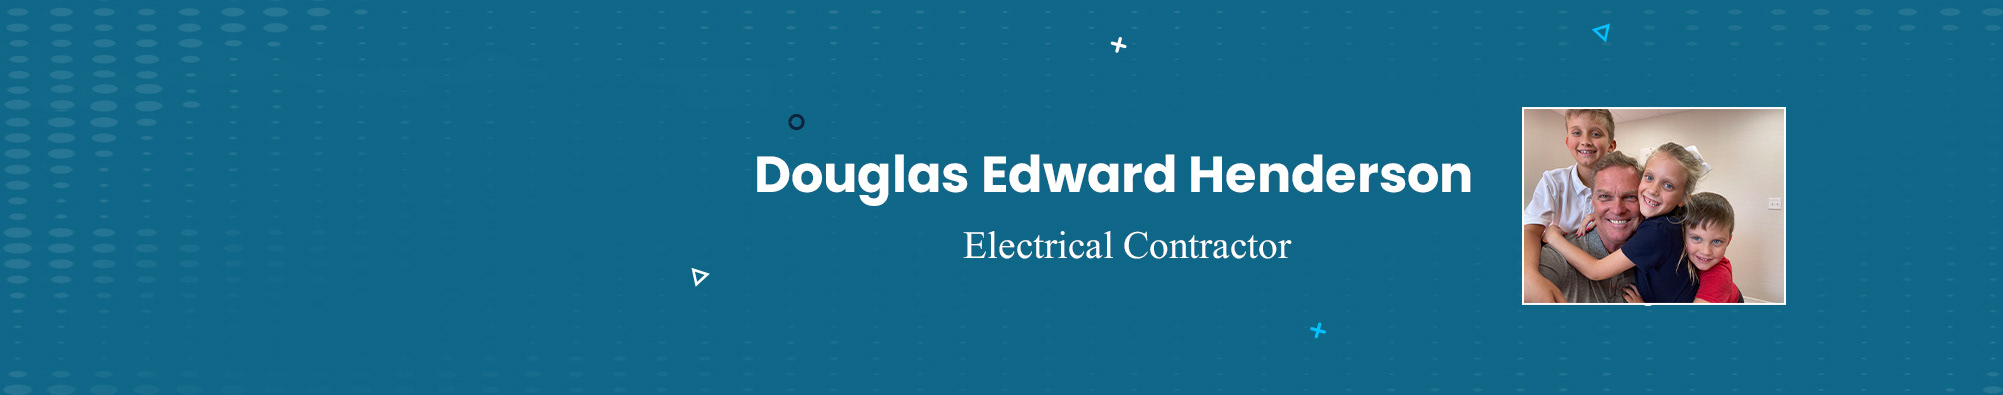 Douglas Edward Henderson's profile banner